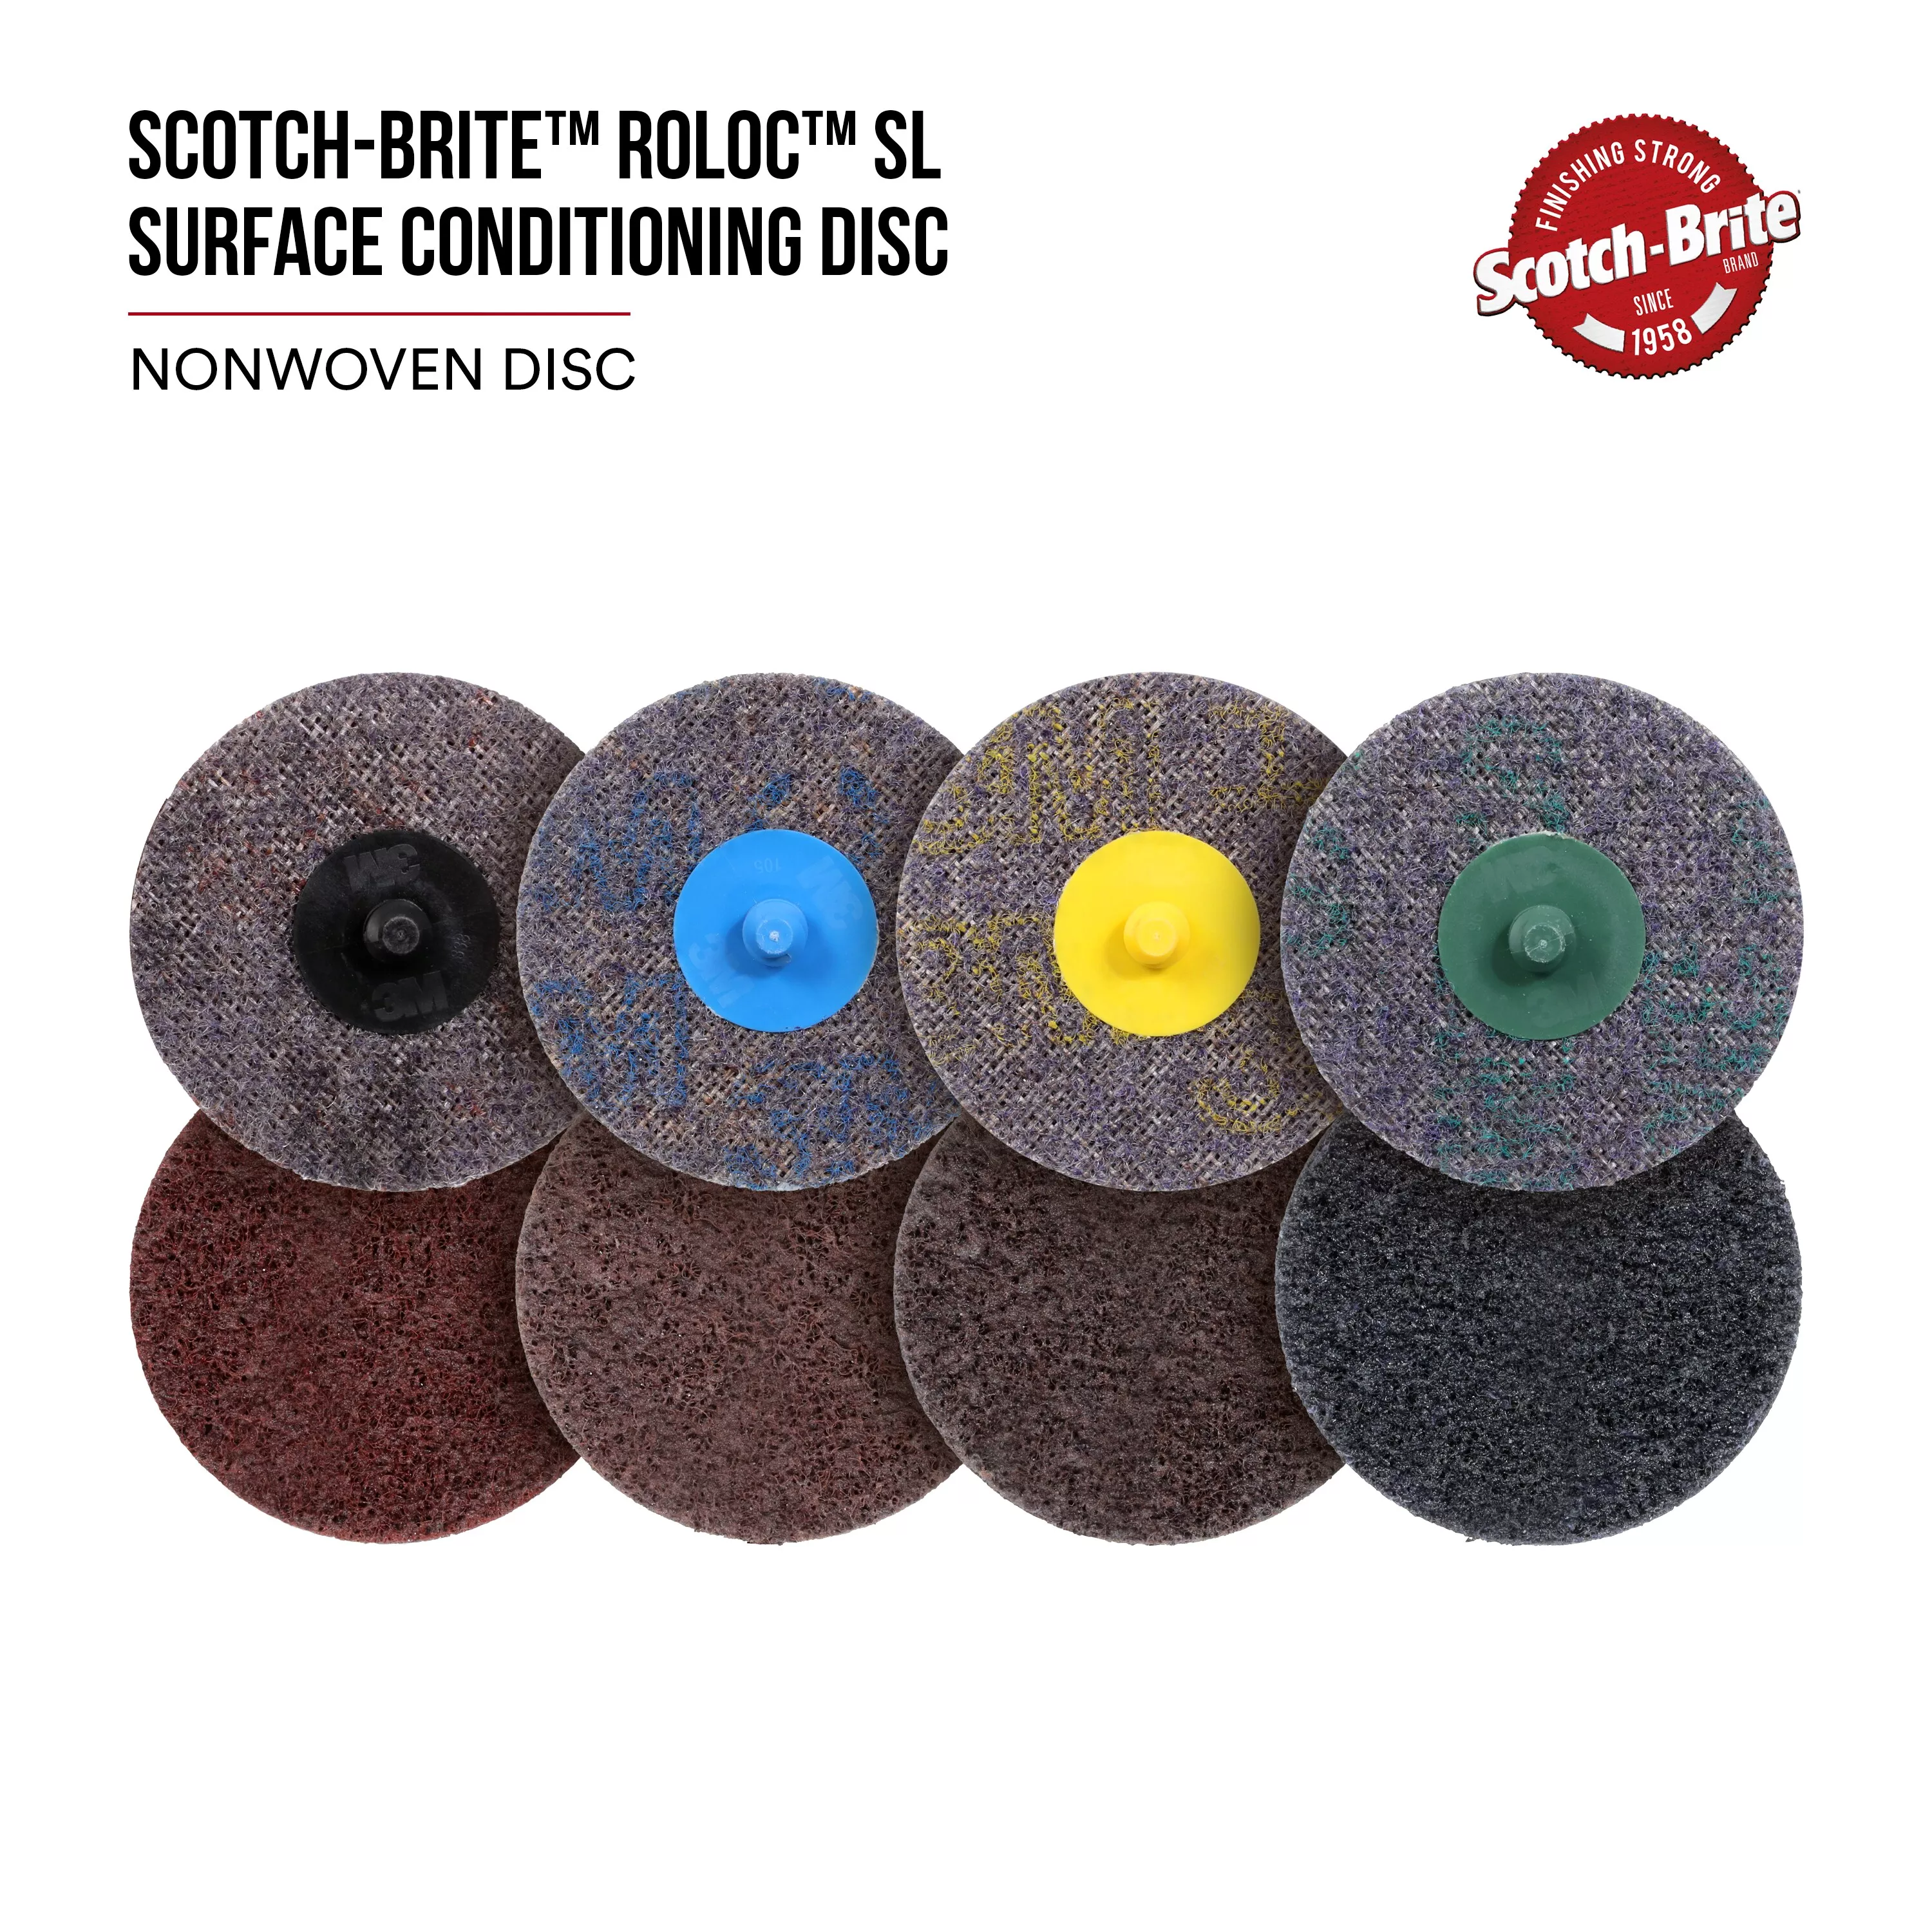 SKU 7010329293 | Scotch-Brite™ Roloc™ SL Surface Conditioning Disc